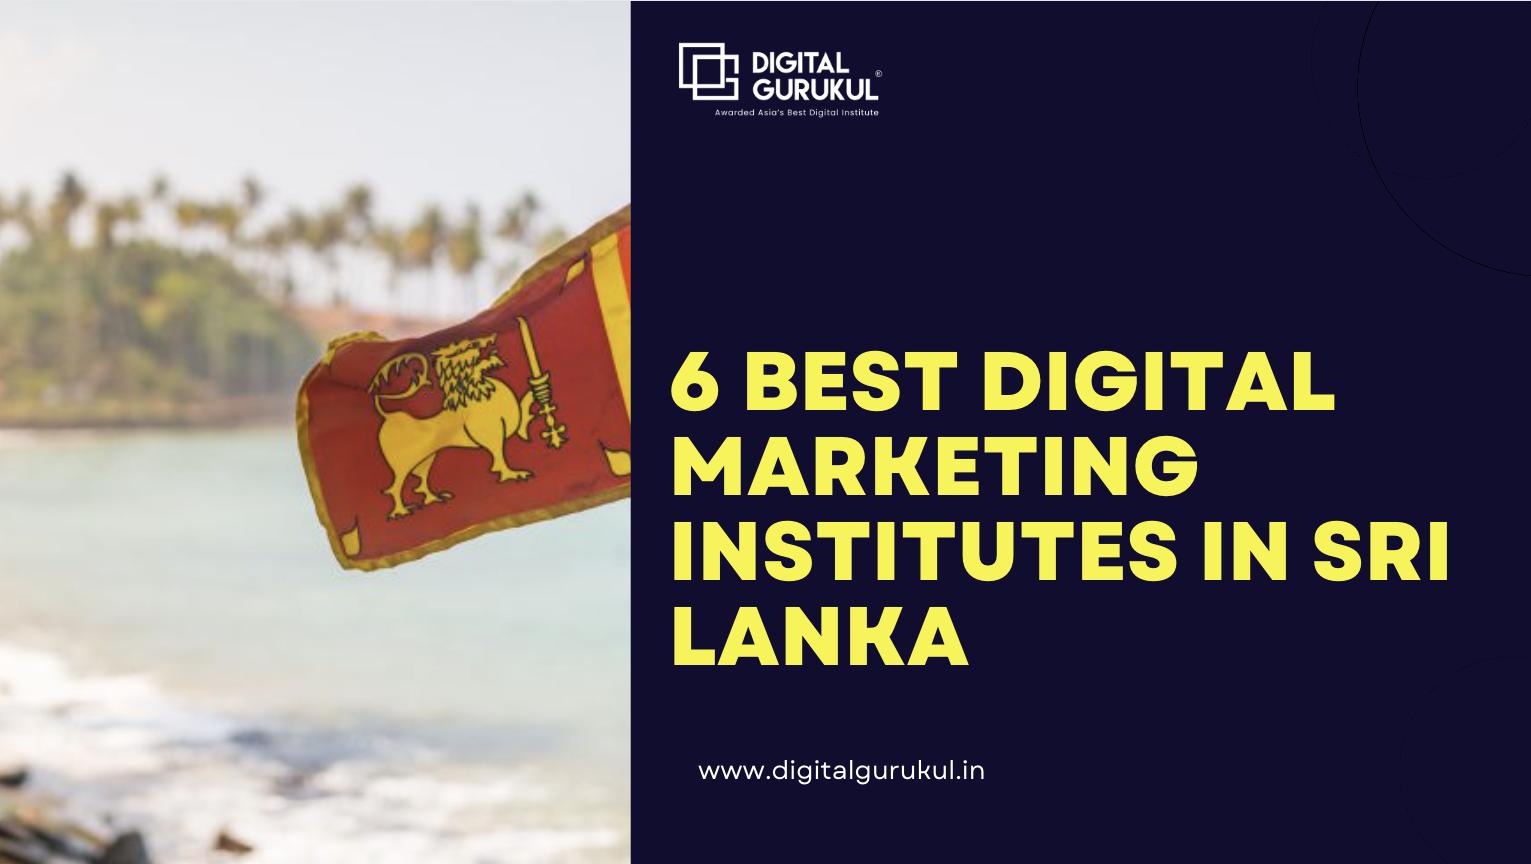 6 Best Digital Marketing Institutes in Sri Lanka